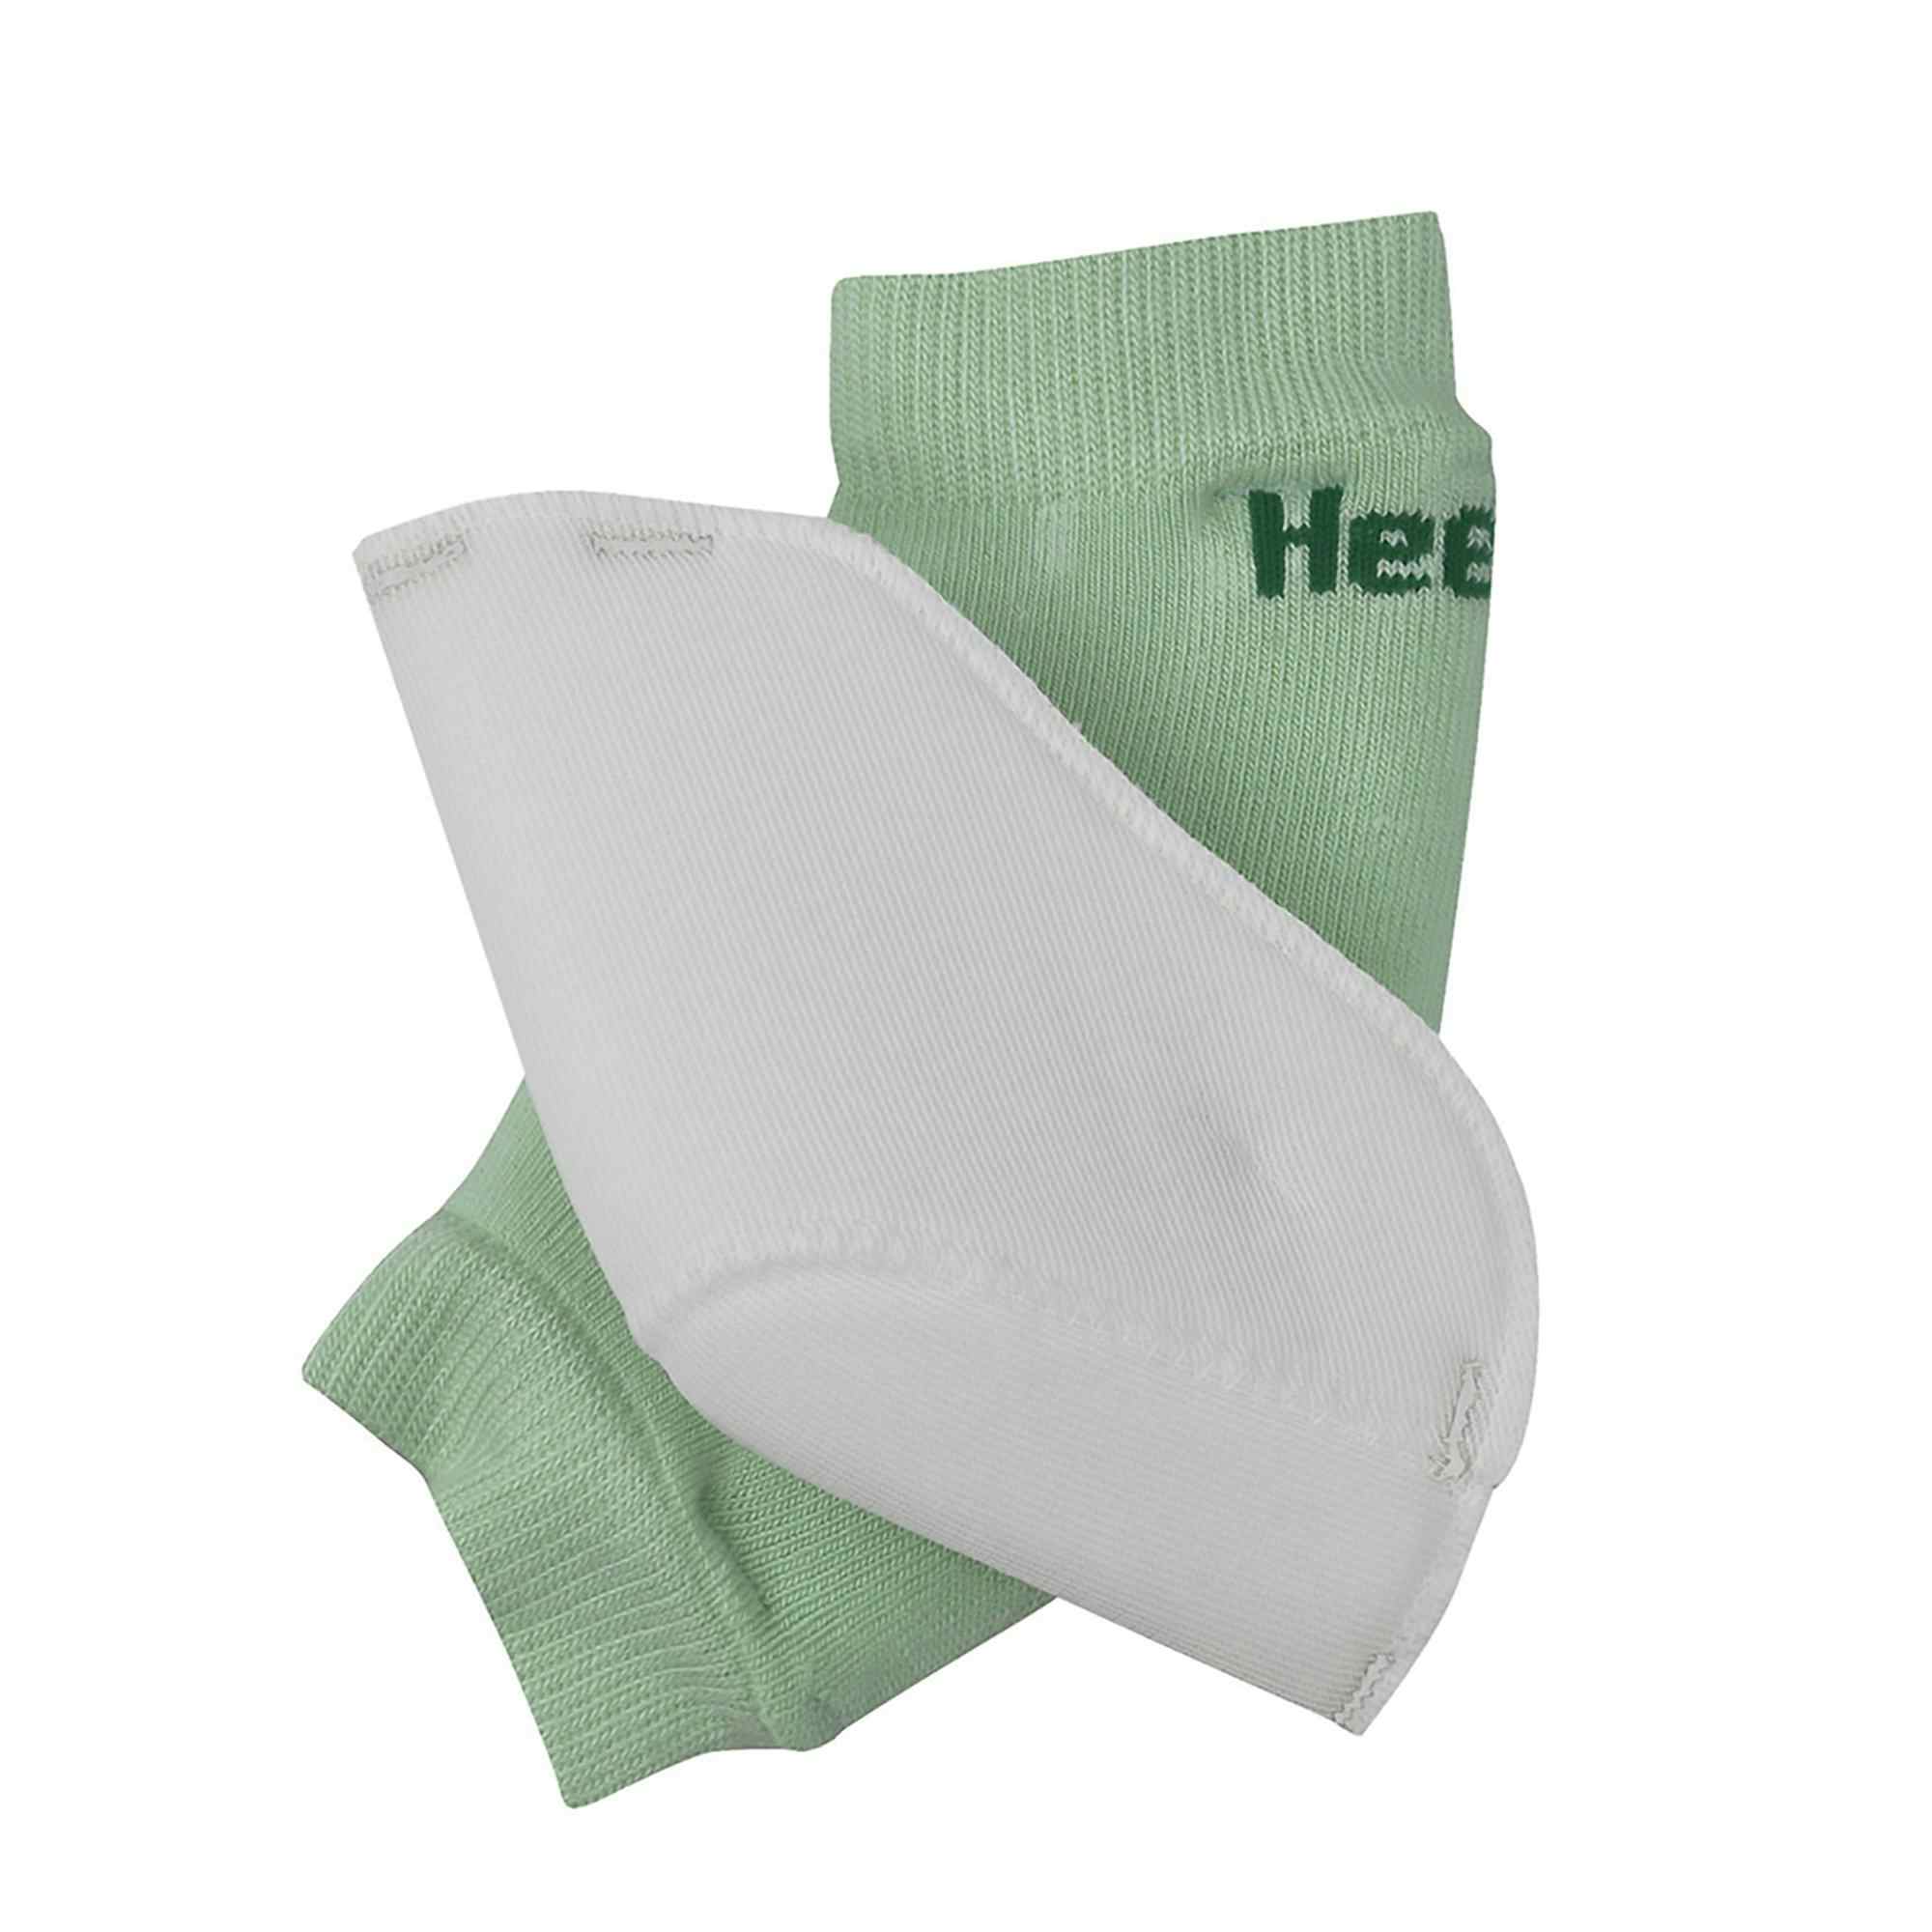 Heelbo Heel/Elbow Protection Sleeve , D 12040, Green X-Large - 1 Each